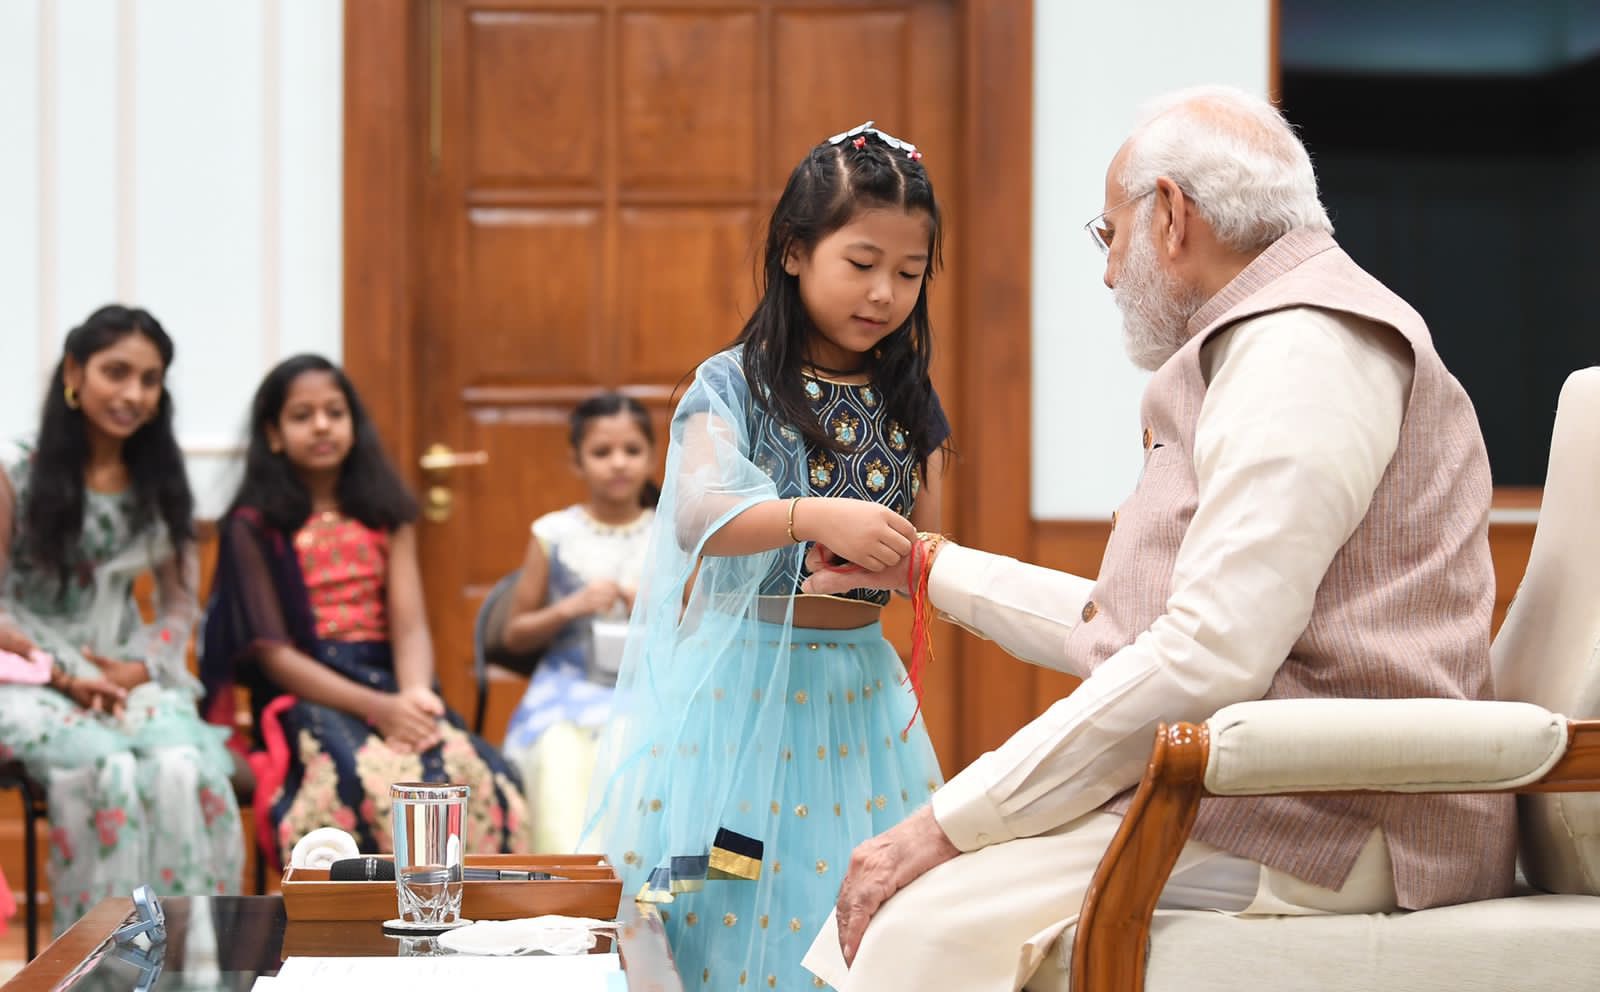 Prime Minister Modi celebrated Rakshabandhan with daughters of PMO staff